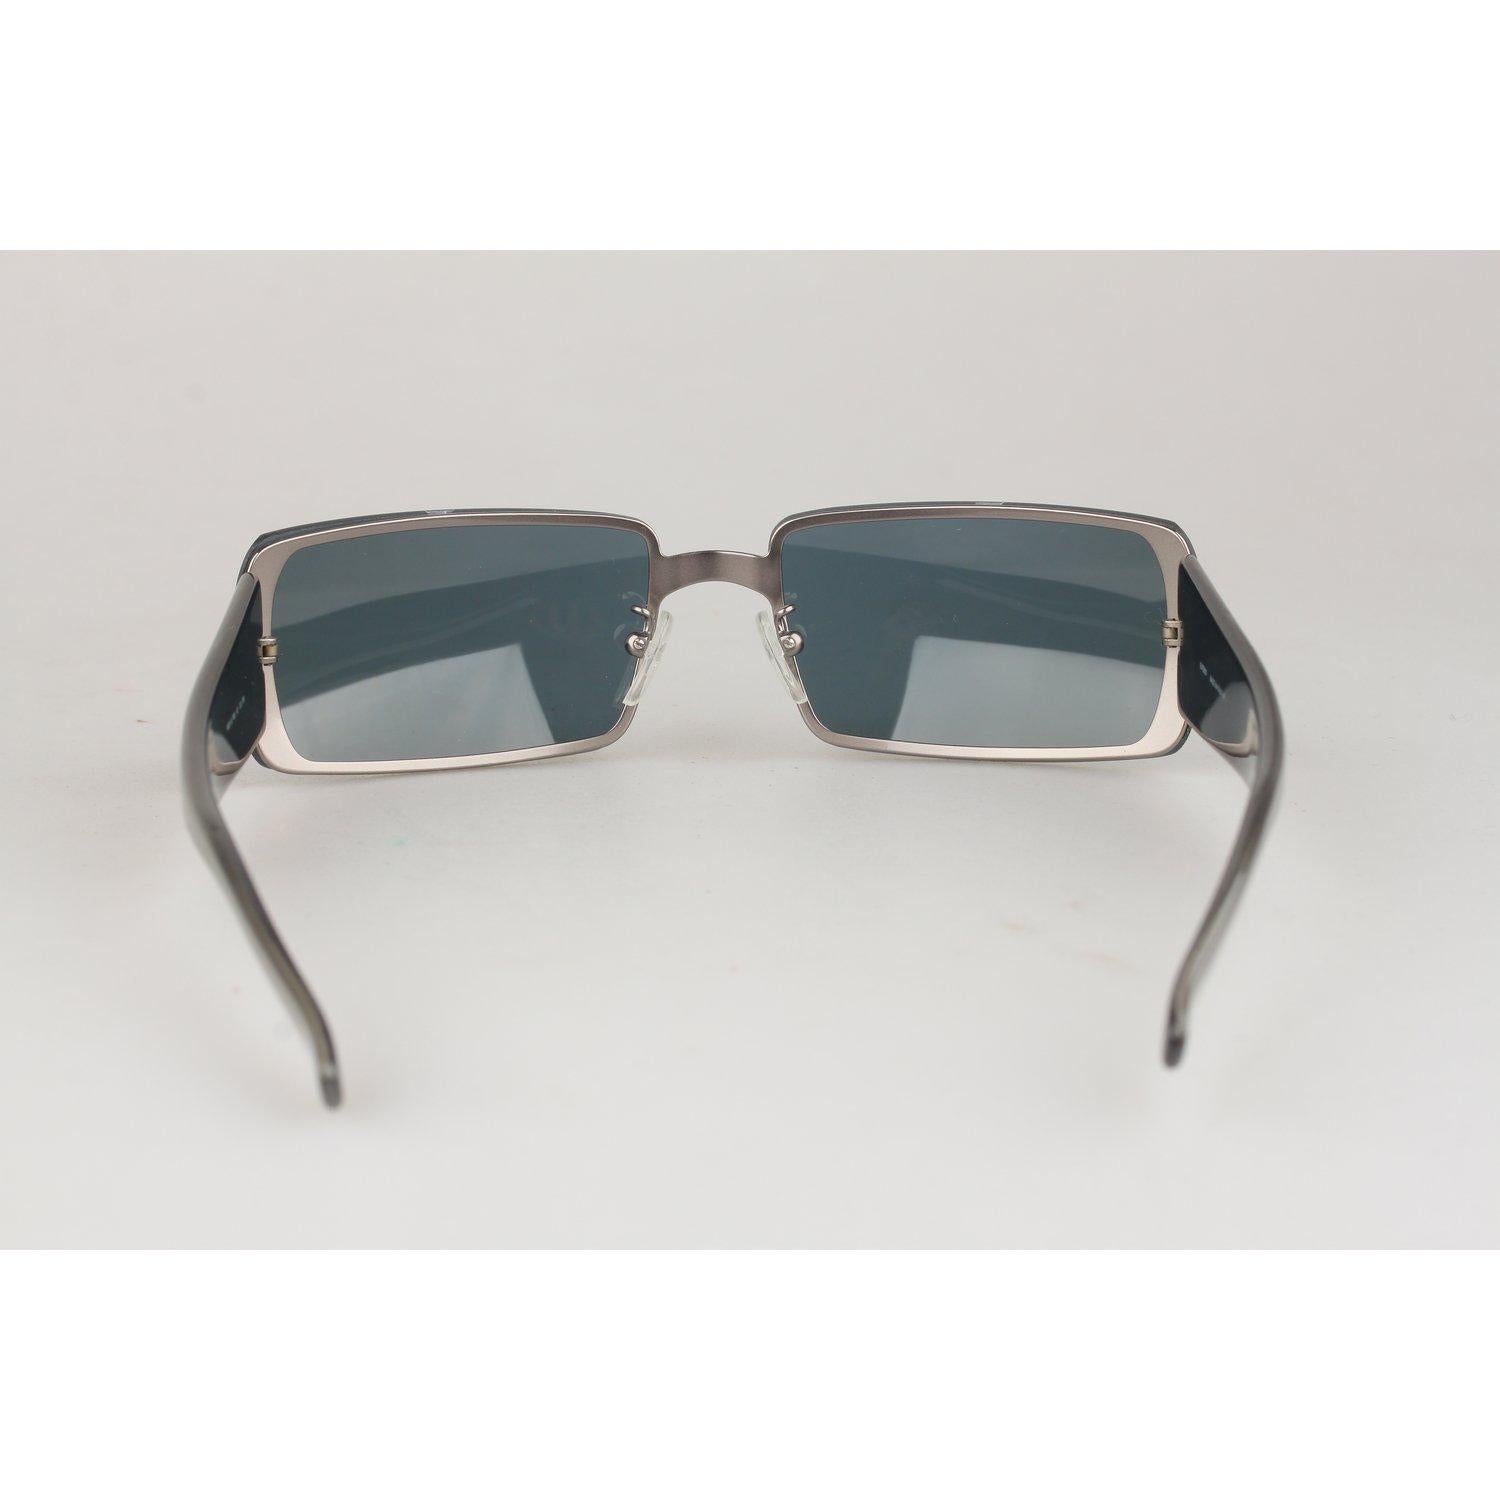 Black Fendi Unisex Sunglasses Mod. SL7460 Col. 568 62mm